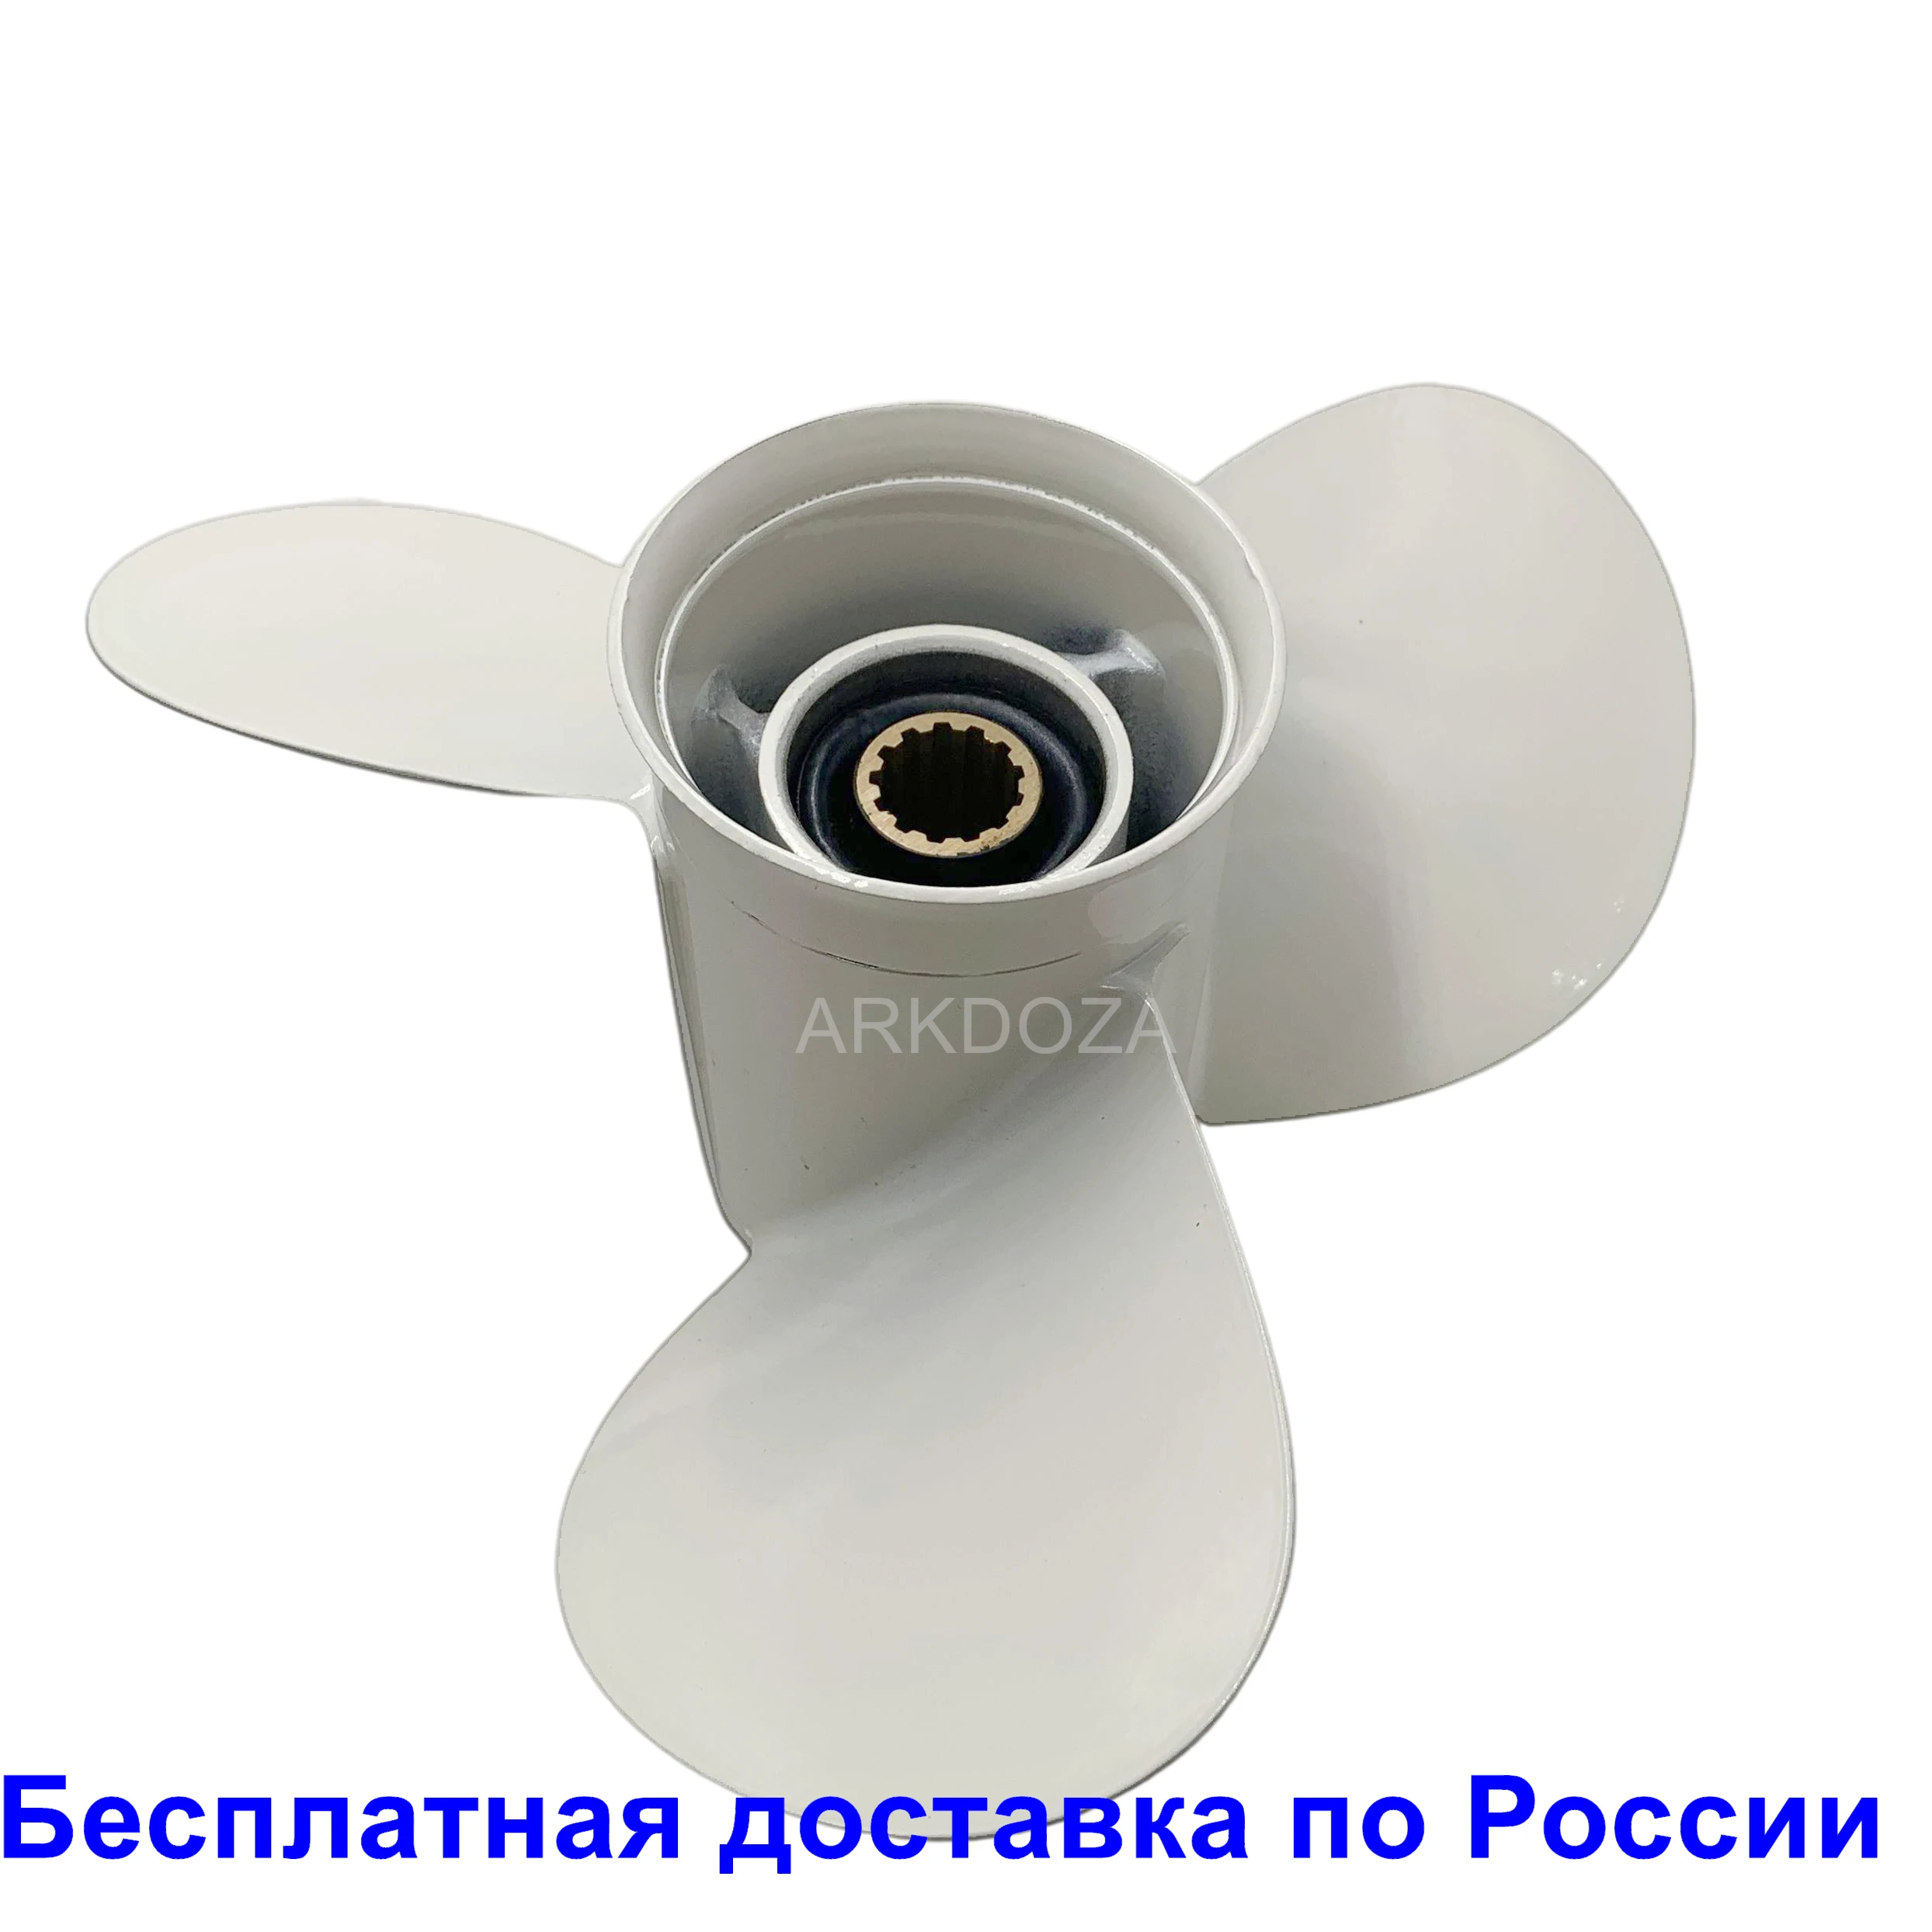 Boat propeller suit for Yamaha 11x15 aluminum prop 40-55HP 3 blade 13 tooth RH OEM No: 69W-45943-00-EL примула короткостебельная 11x15 см